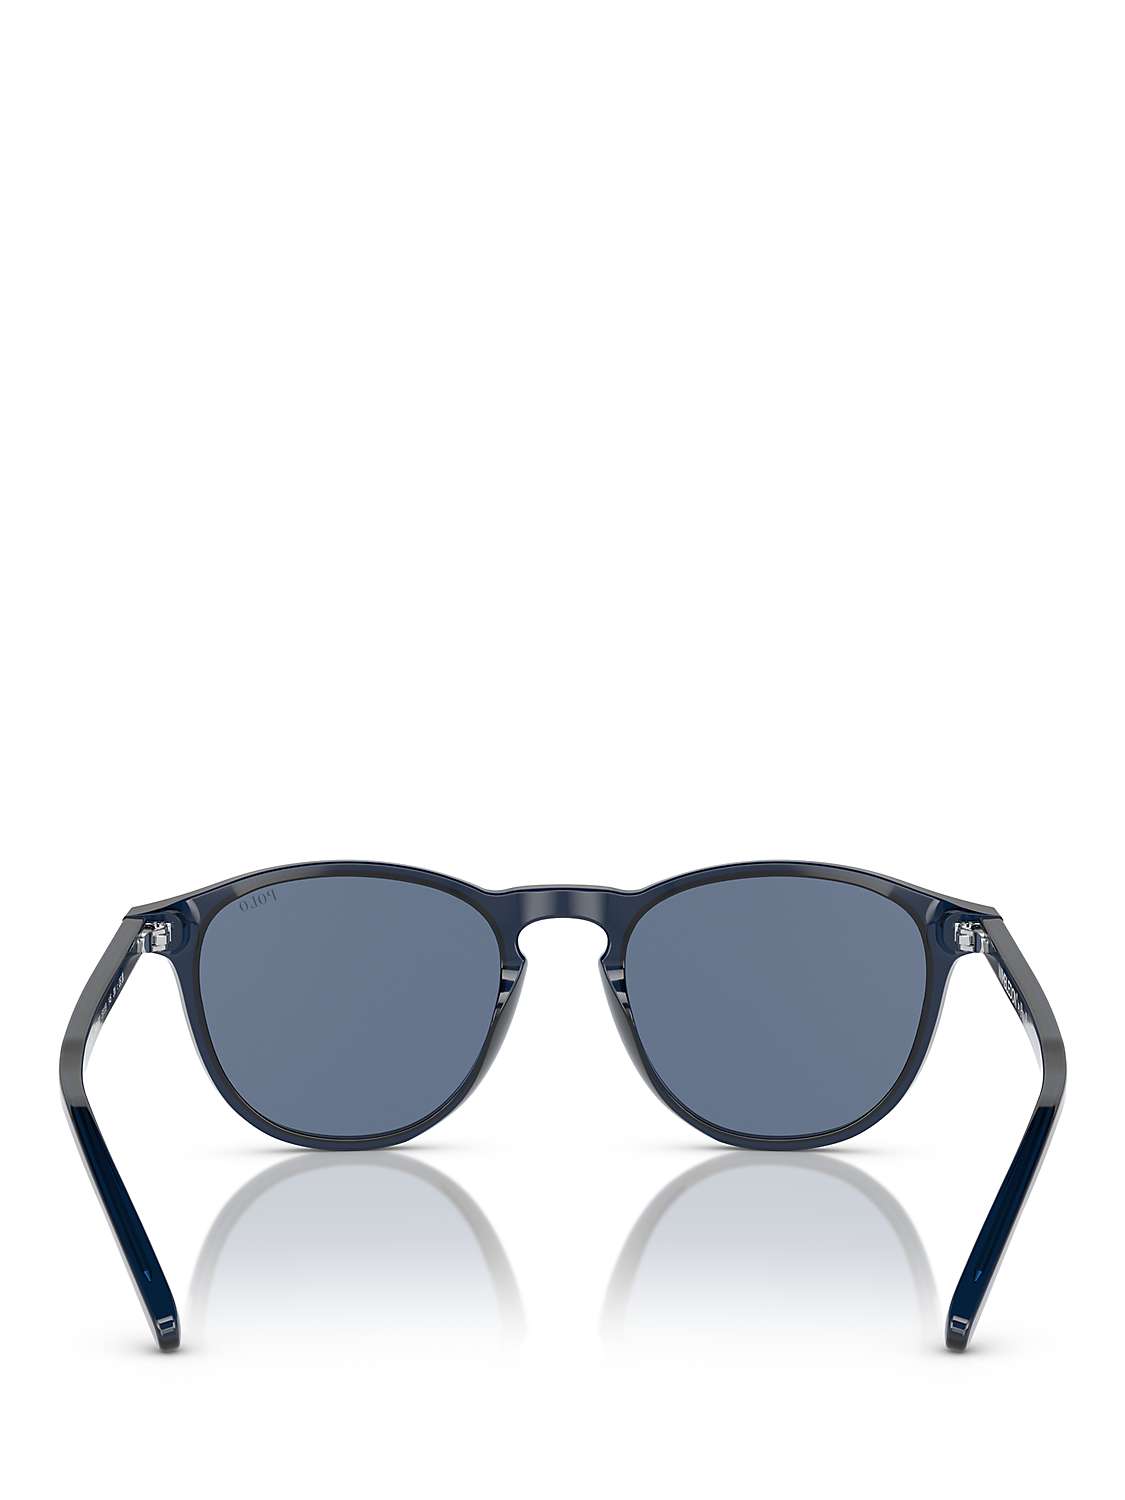 Buy Ralph Lauren PH4181 Men's Phantos Sunglasses Online at johnlewis.com